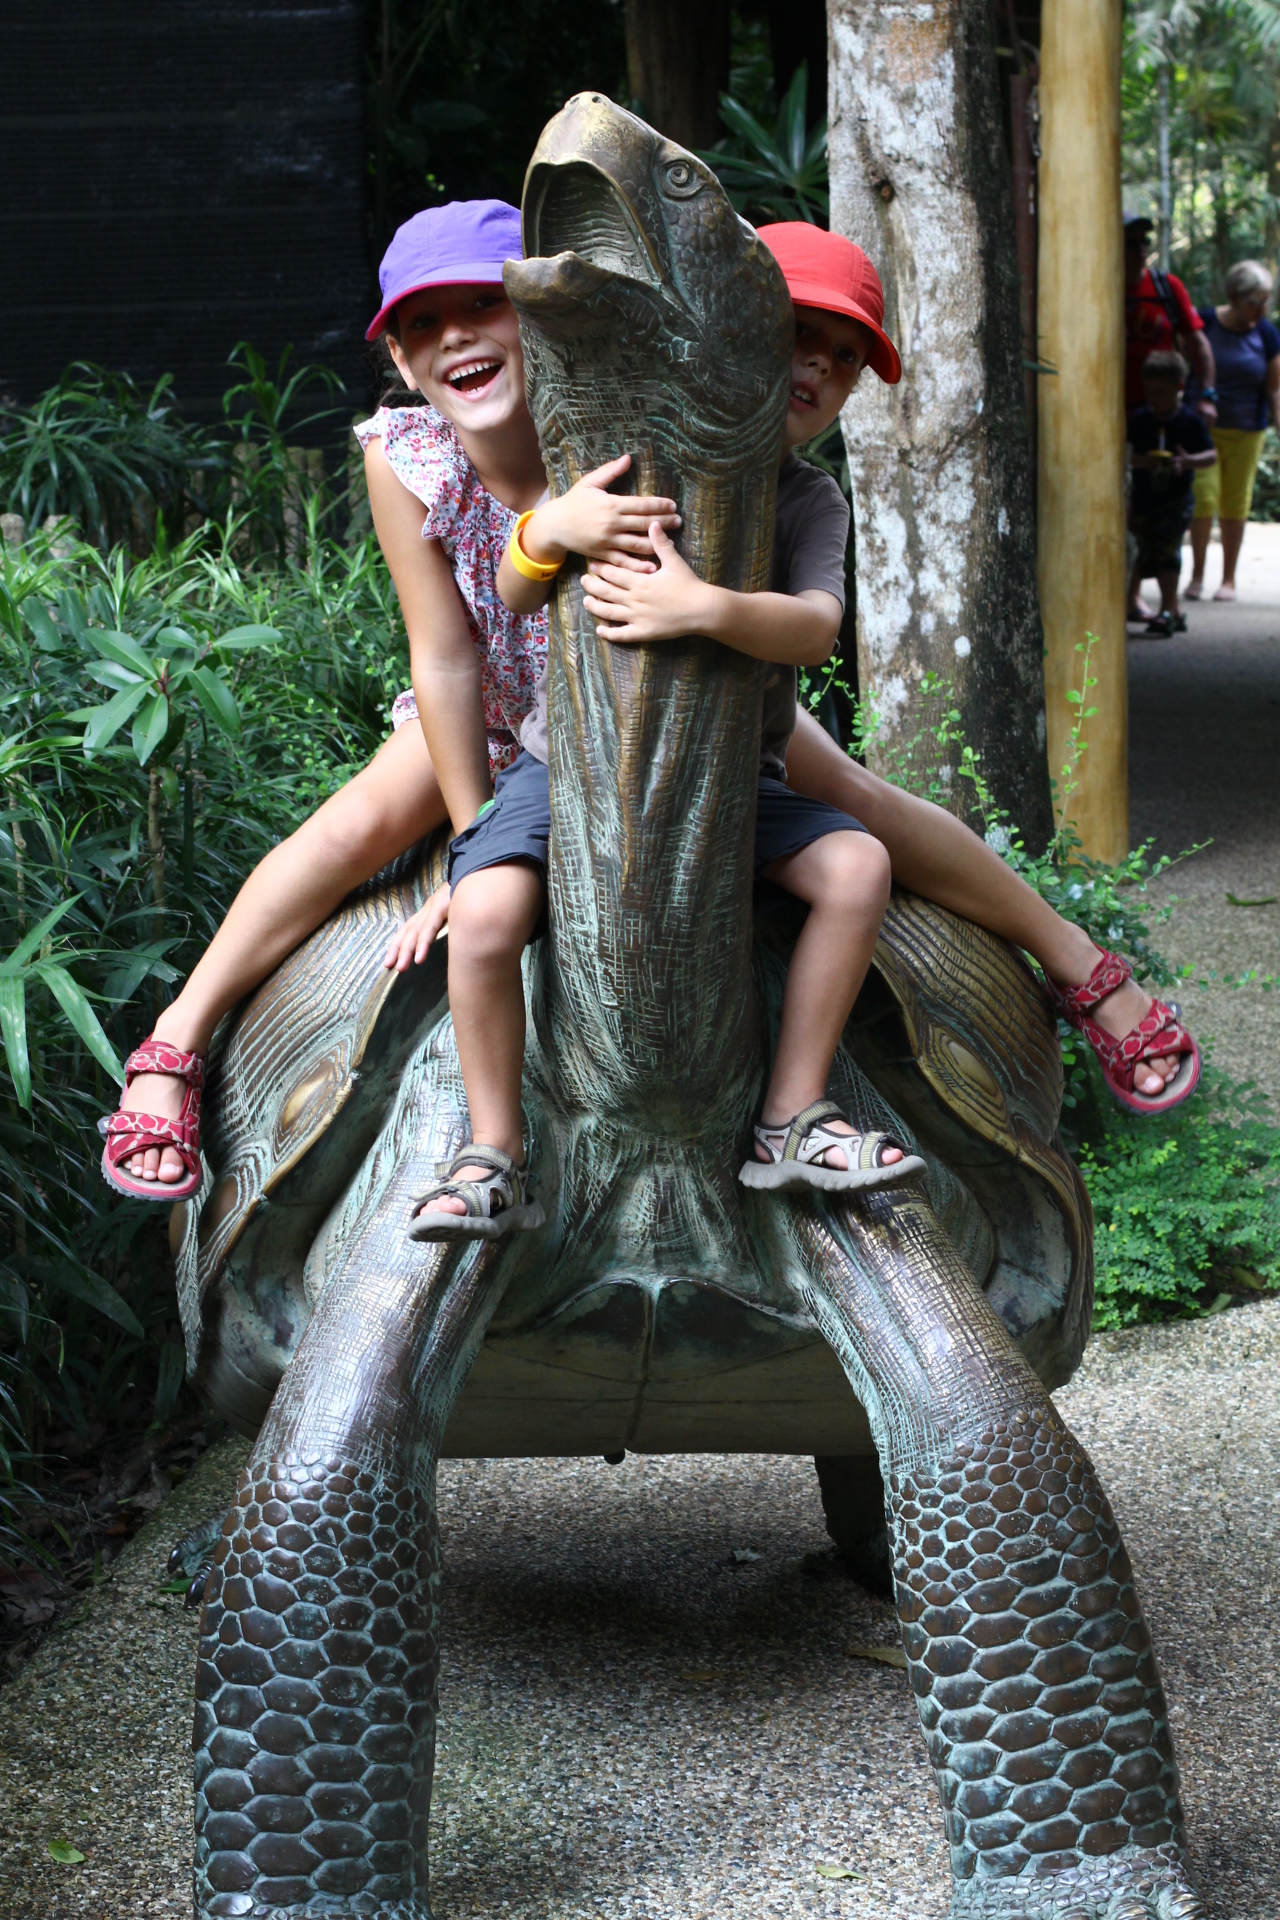 Zoo di Singapore